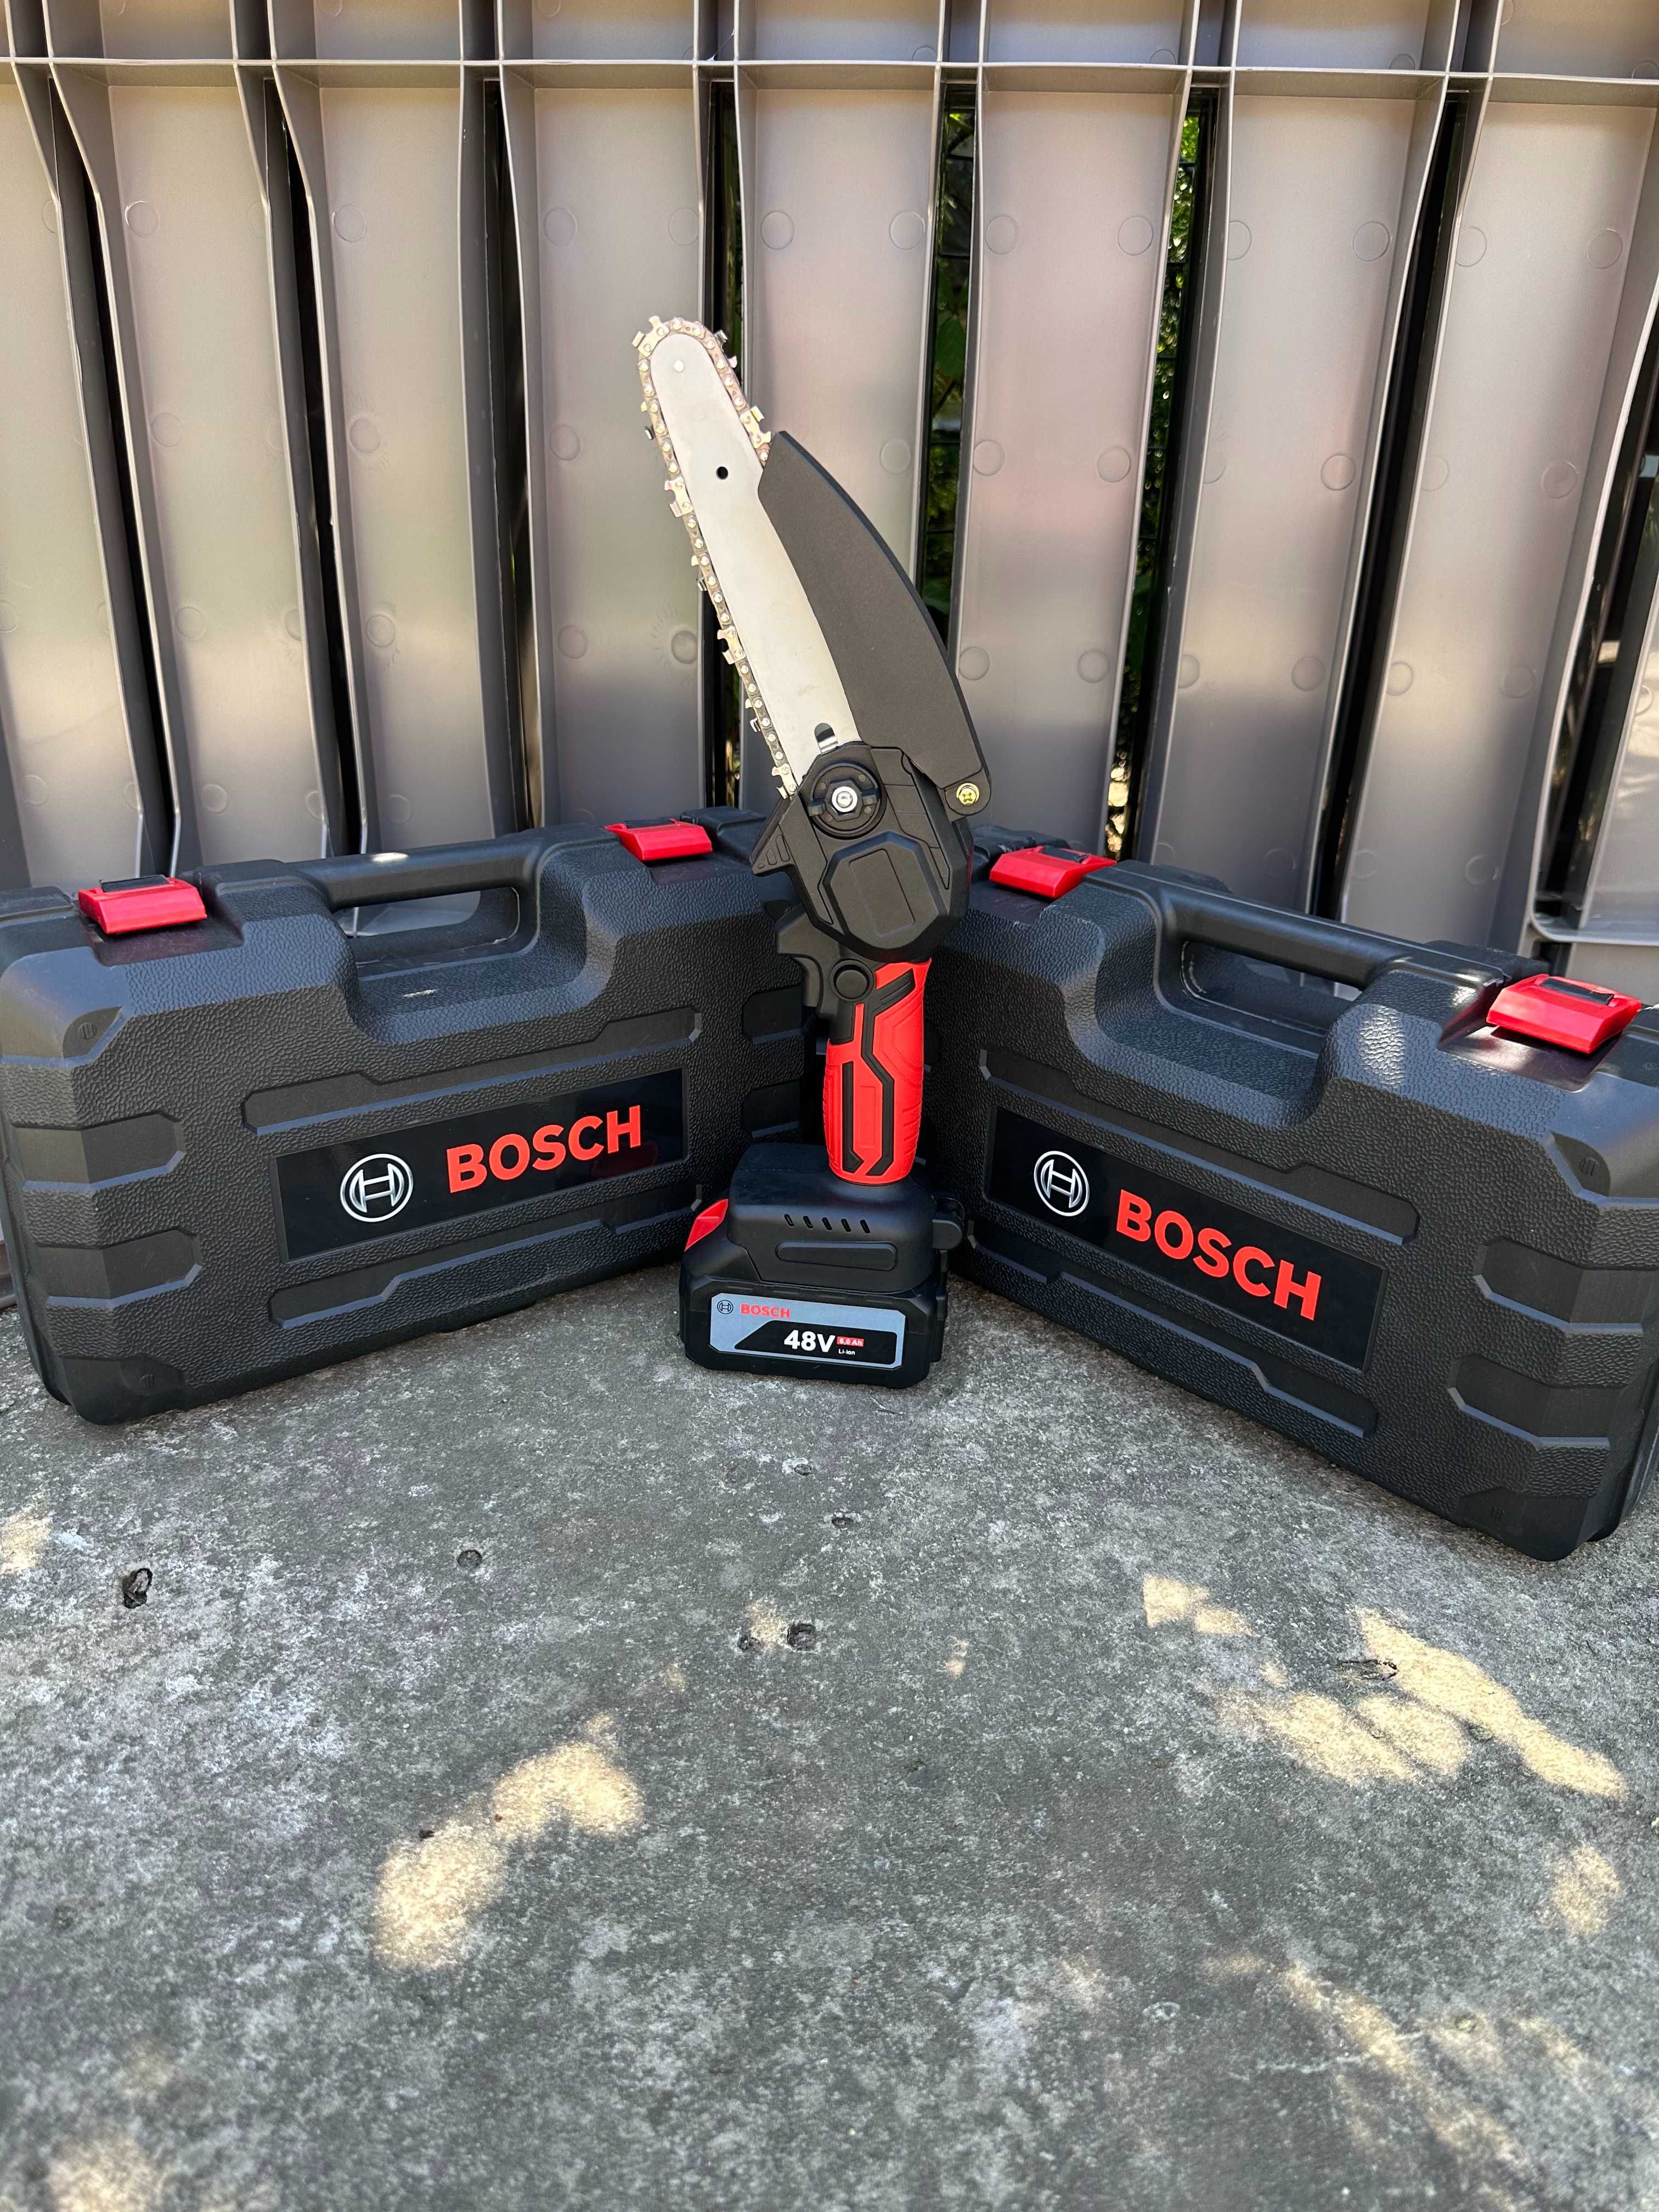 Мини пила веткорез Bosch в кейсе 2 аккумулятора цепная мини пилка 48в